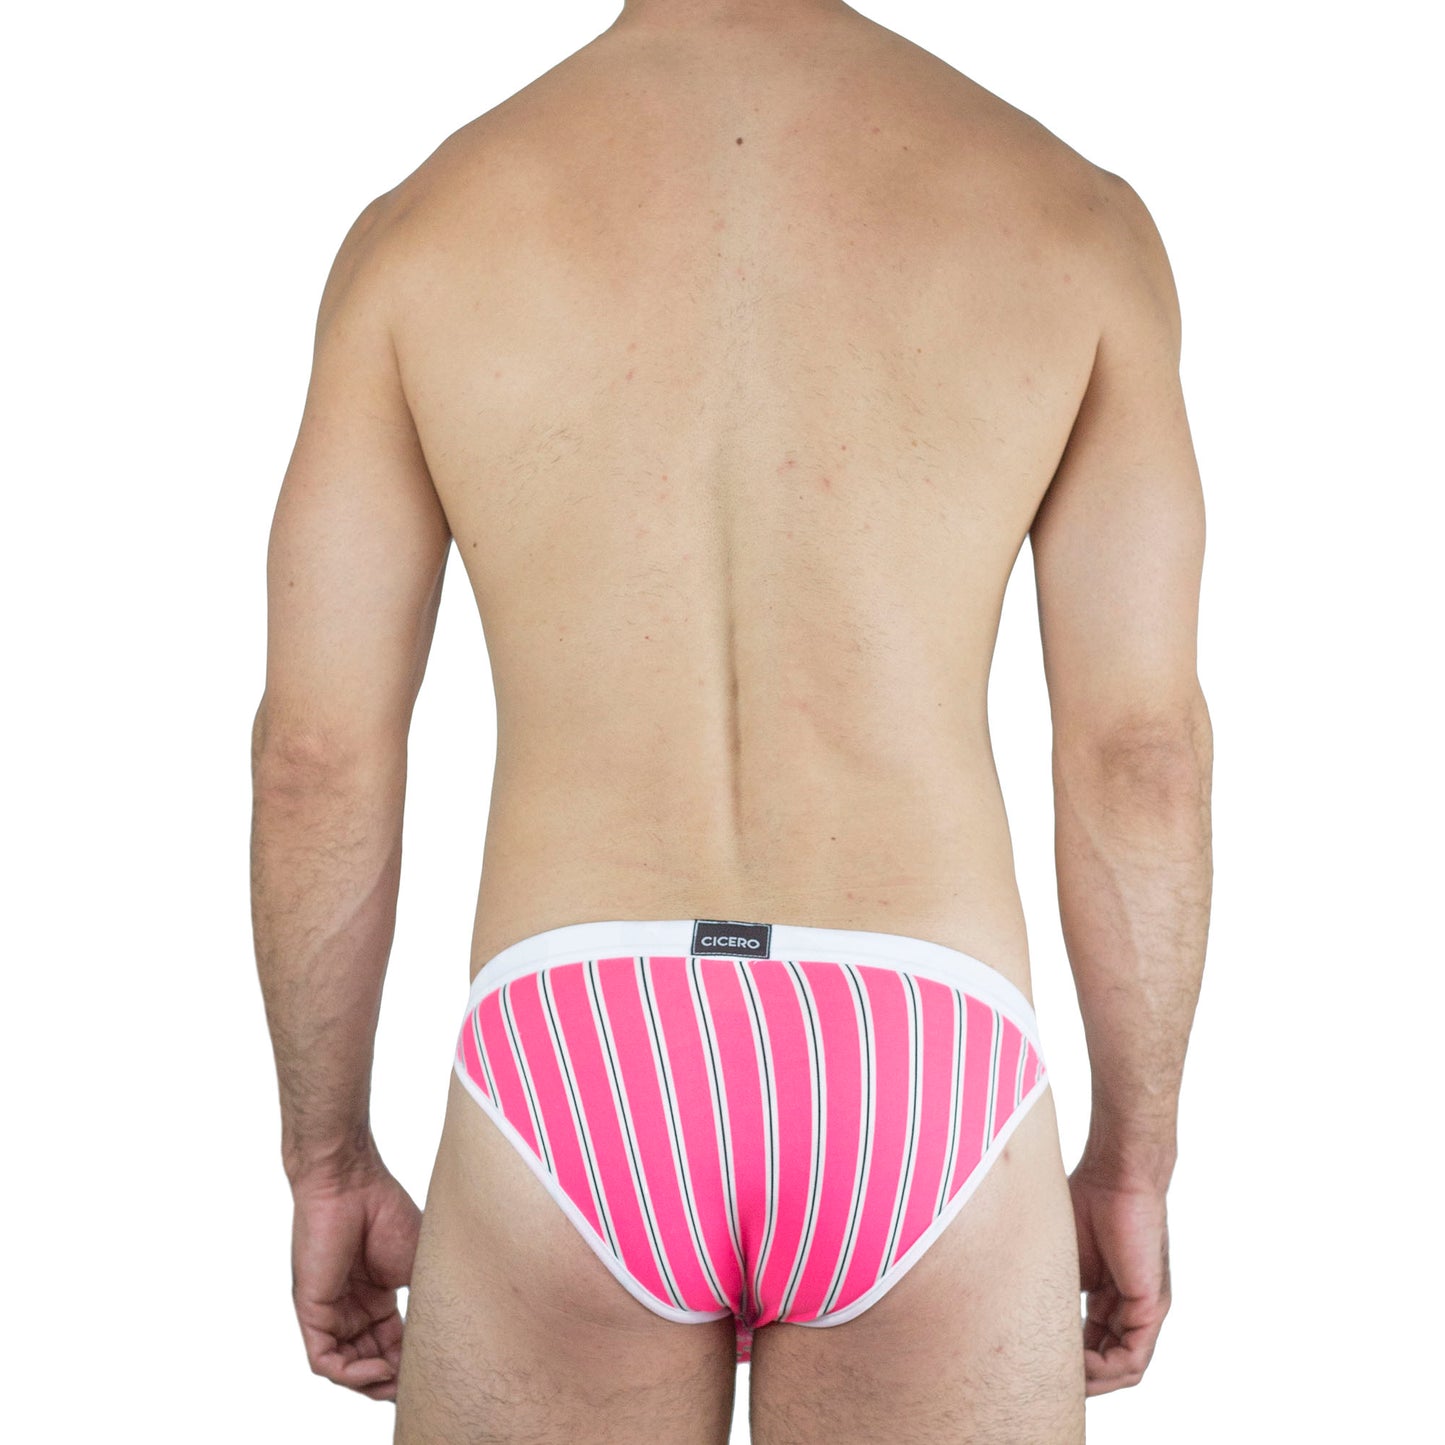 SB0013 Brief neon pink striped bikini with black